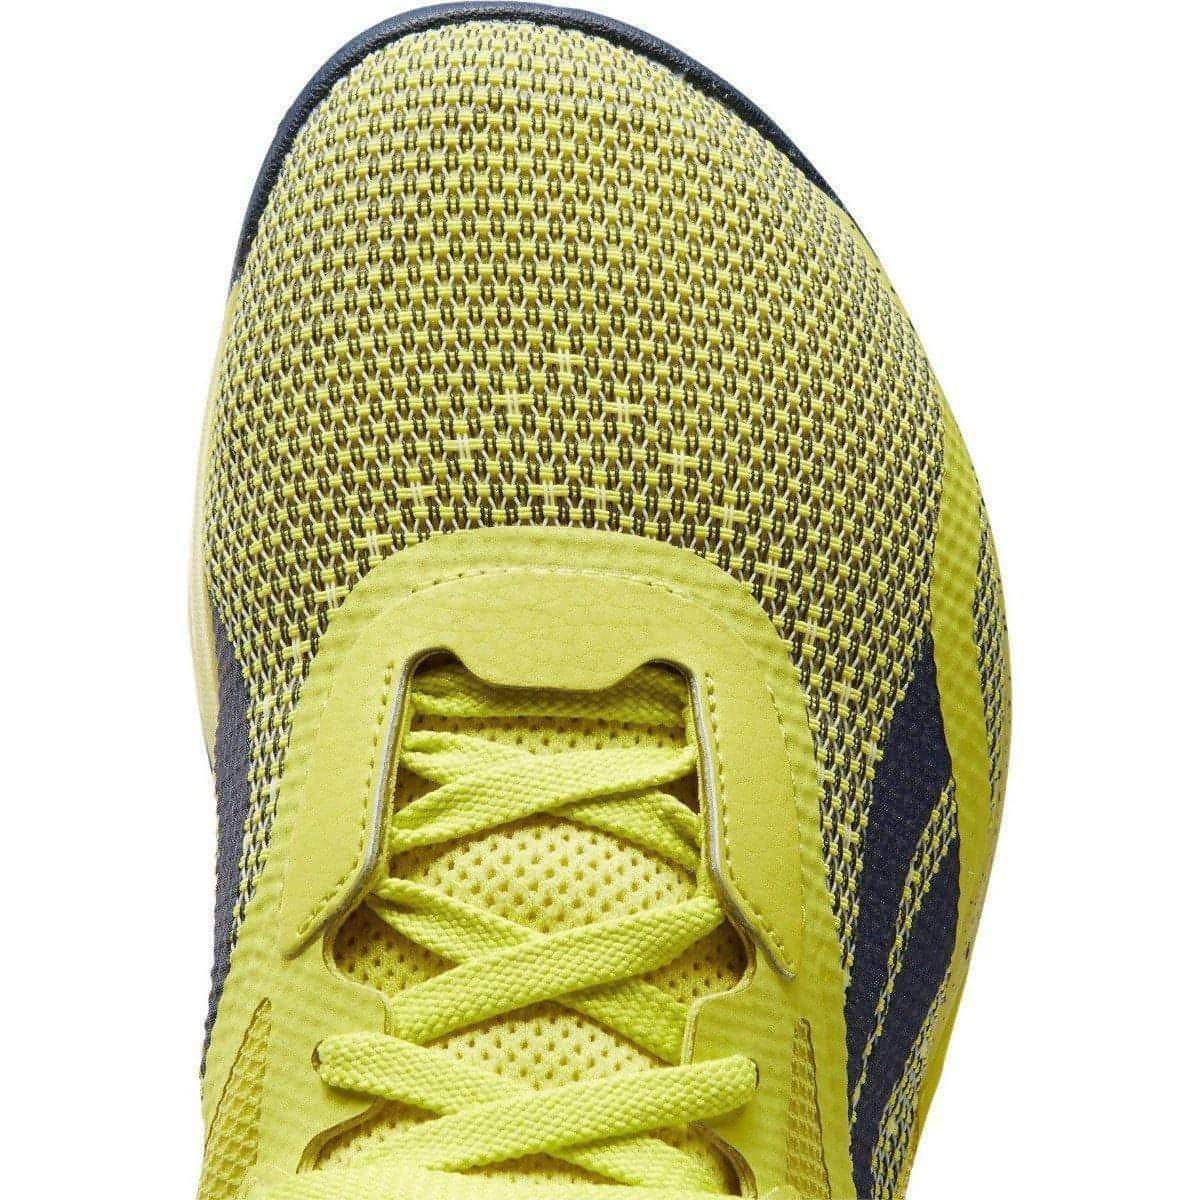 Reebok Nano X Womens Training Shoes - Yellow - Start Fitness